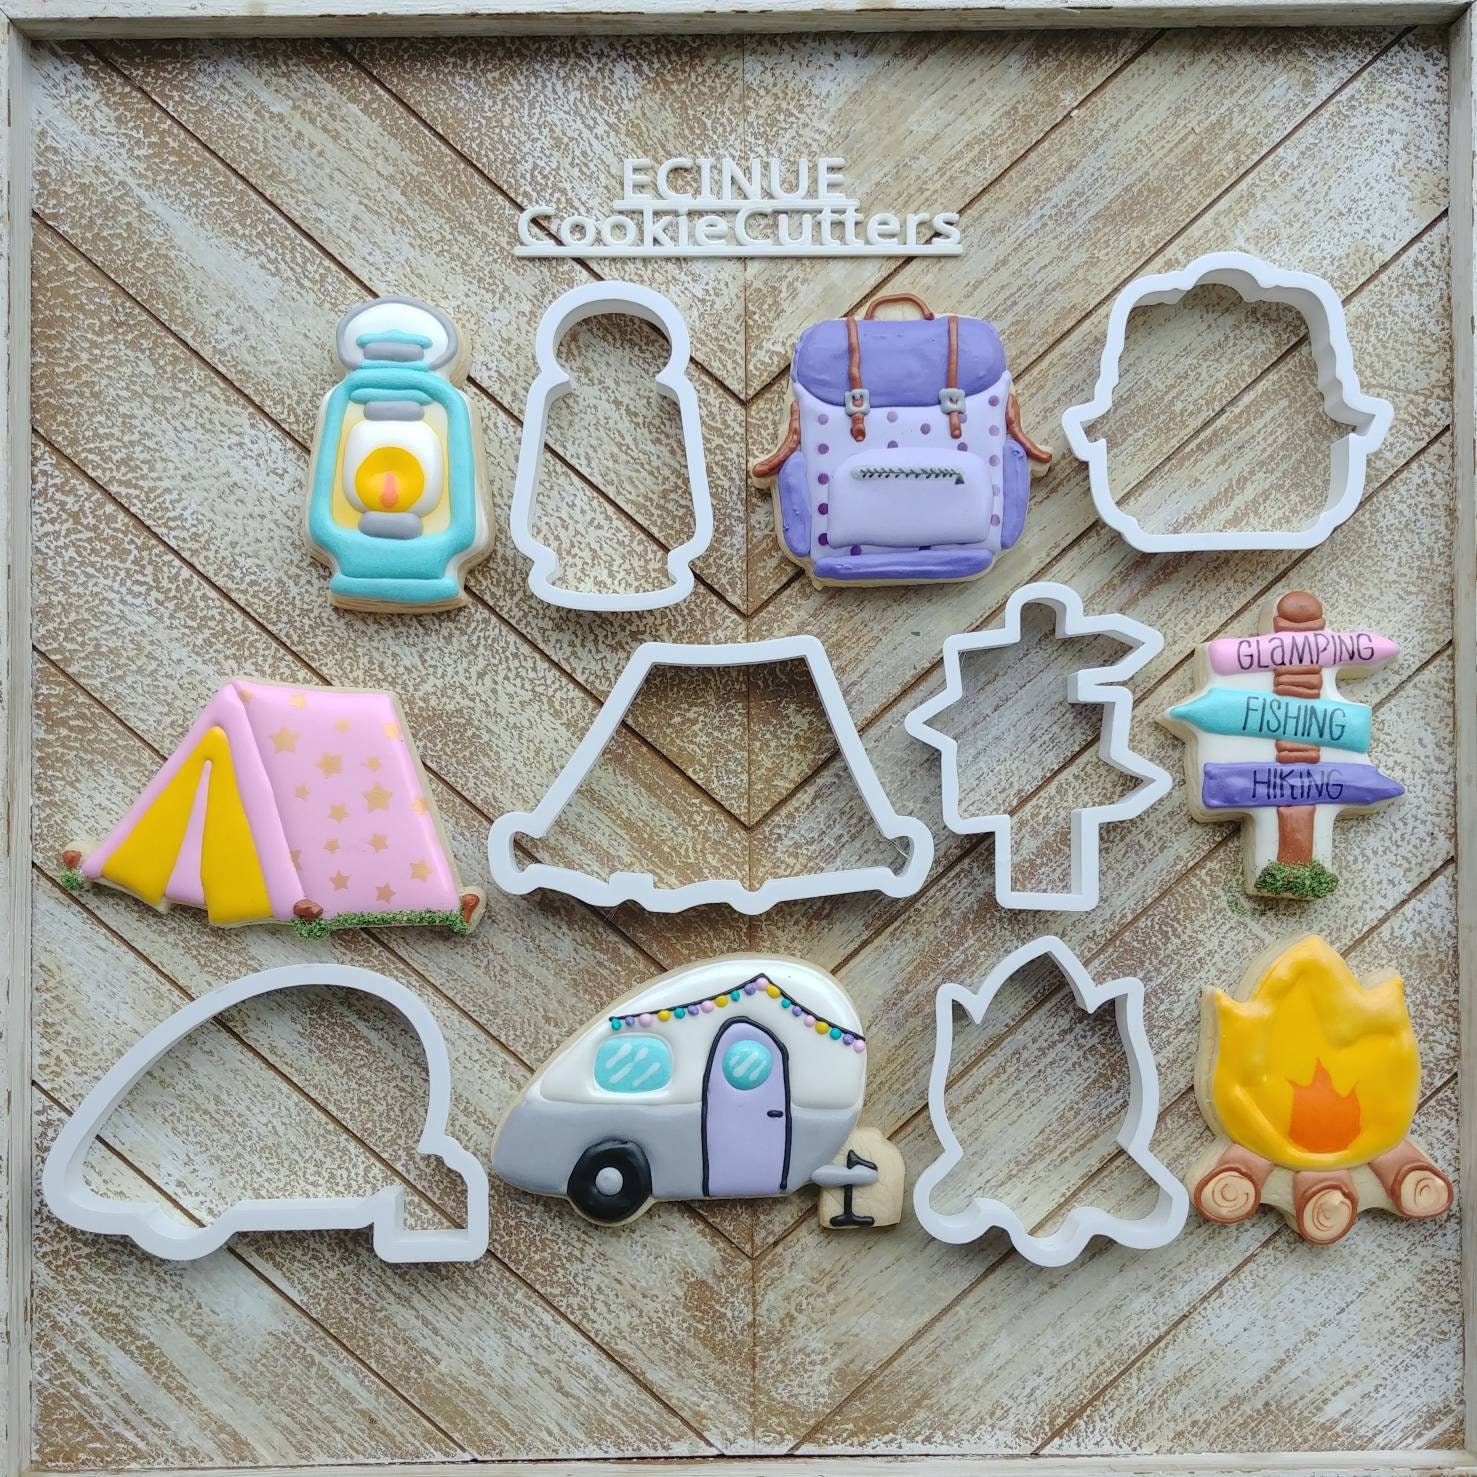 3D Gingerbread Caravan / Camper Cookie Cutter Set | Fondant Cutters 